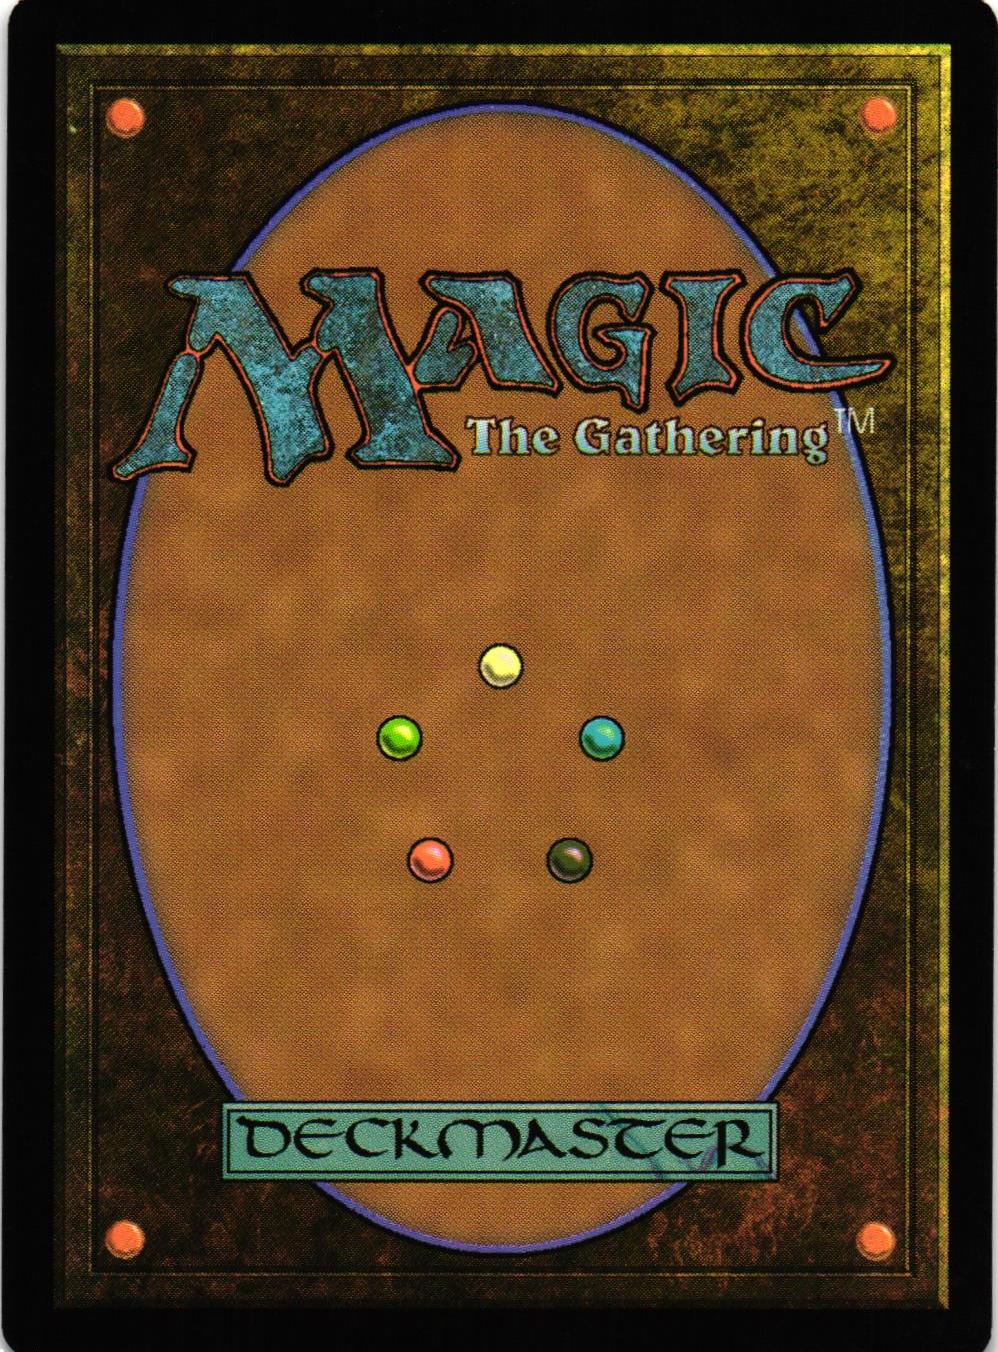 Satyr Wayfinder Common 198/269 Magic 2015 (M15) Magic the Gathering